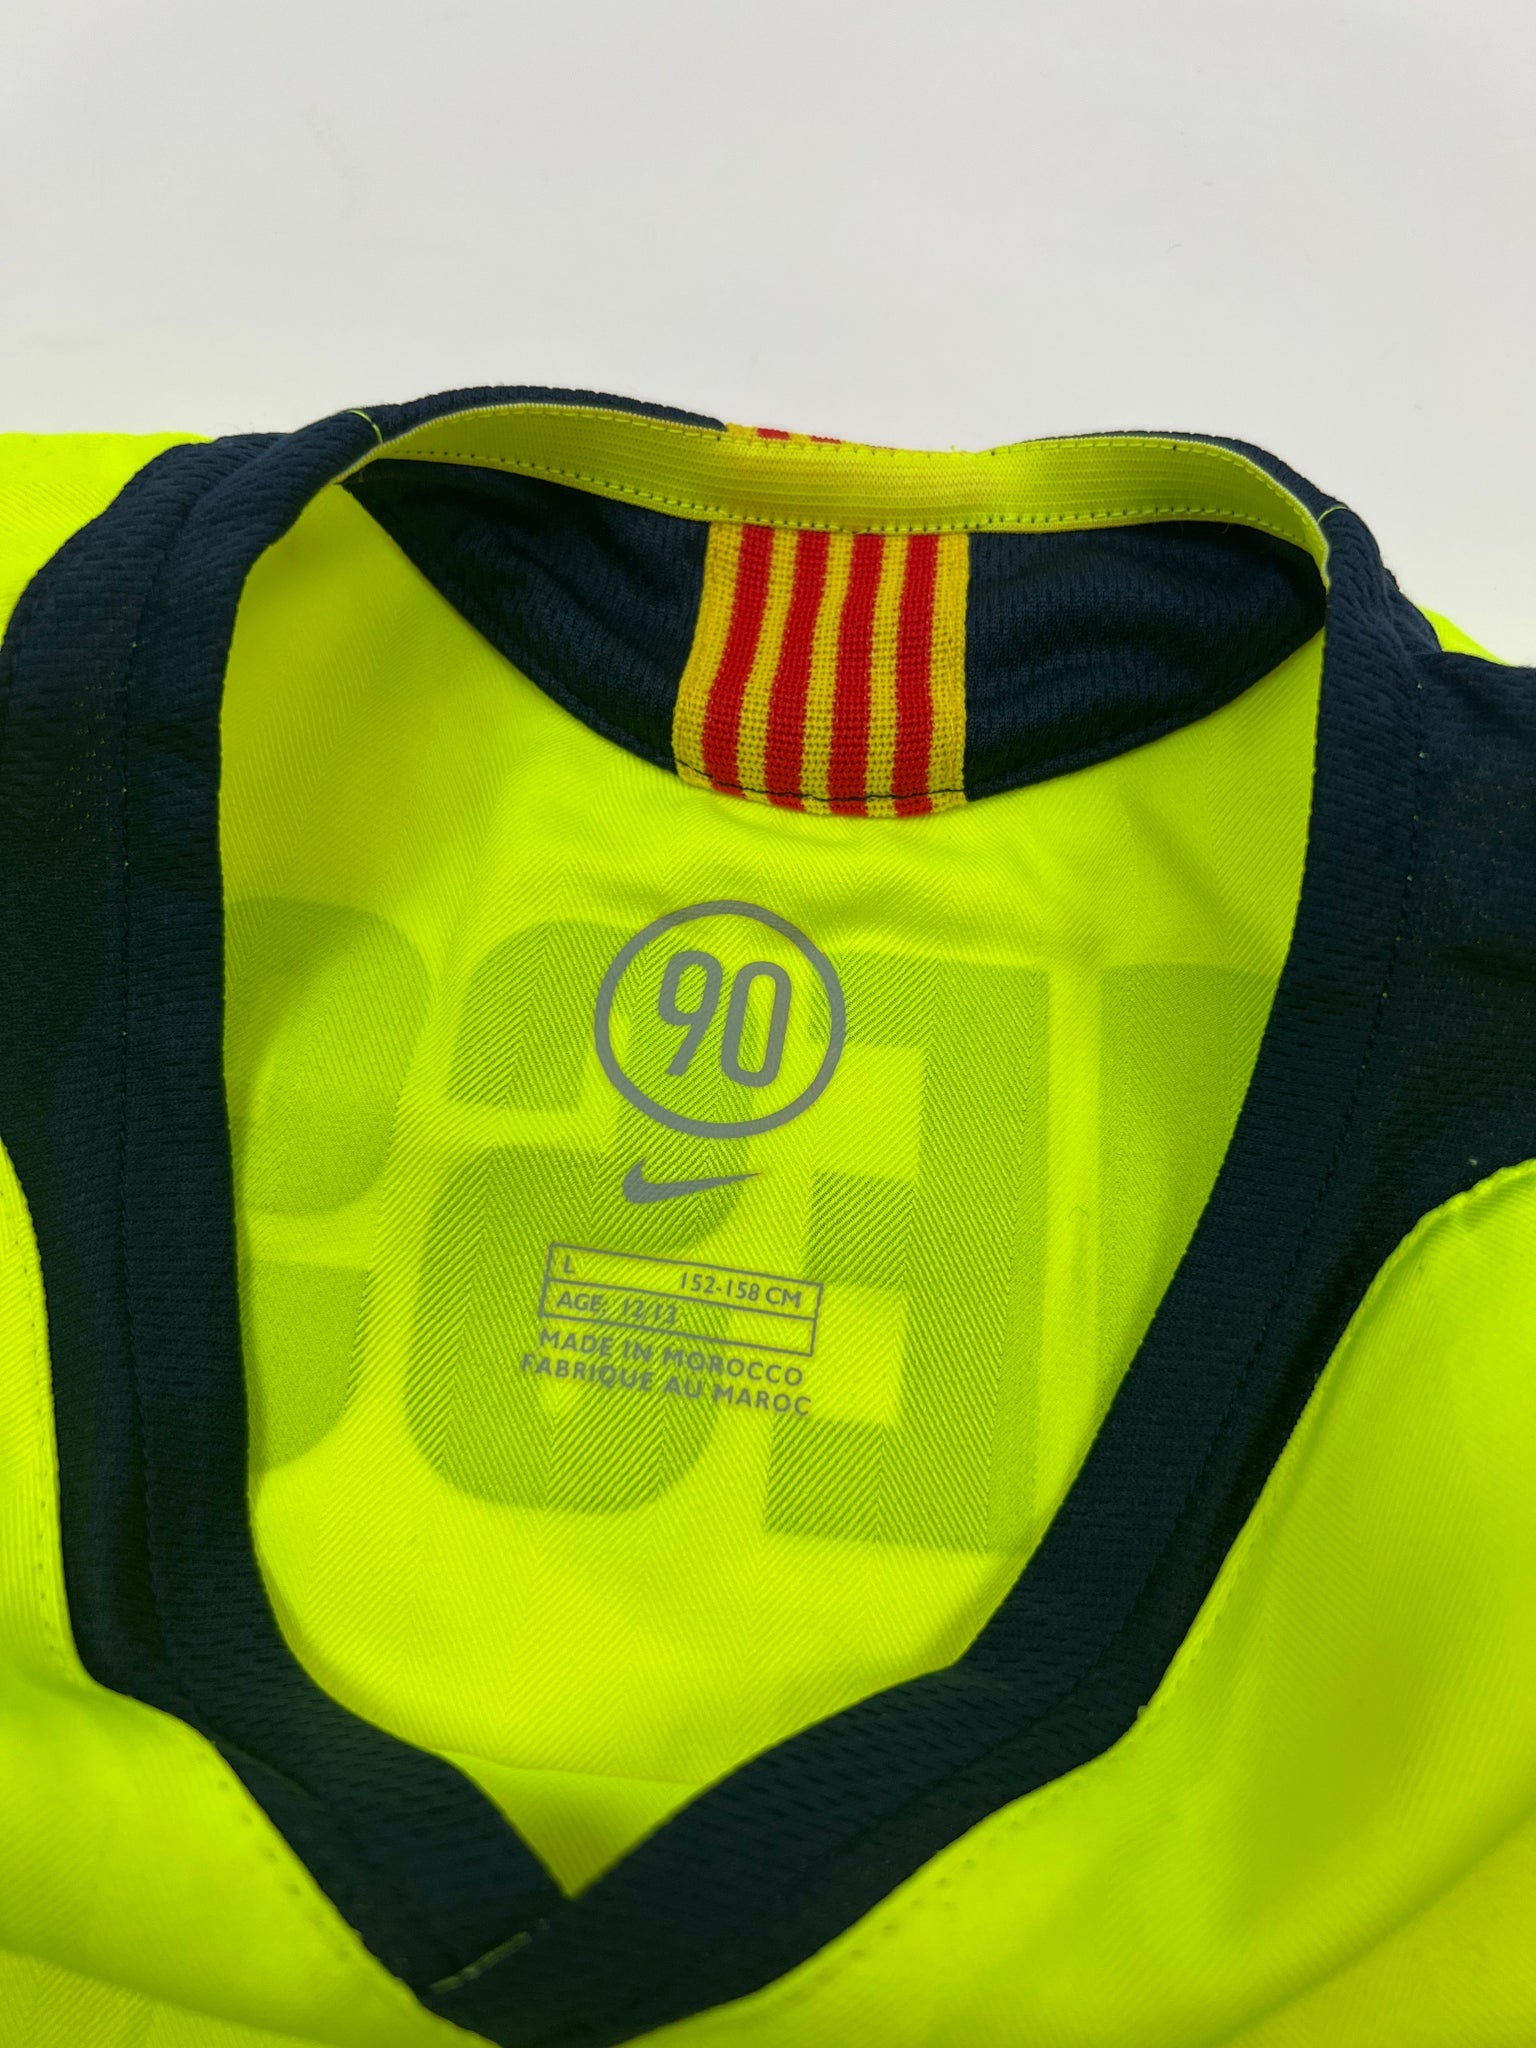 Nike FC Barcelona Jersey (Kids XL)